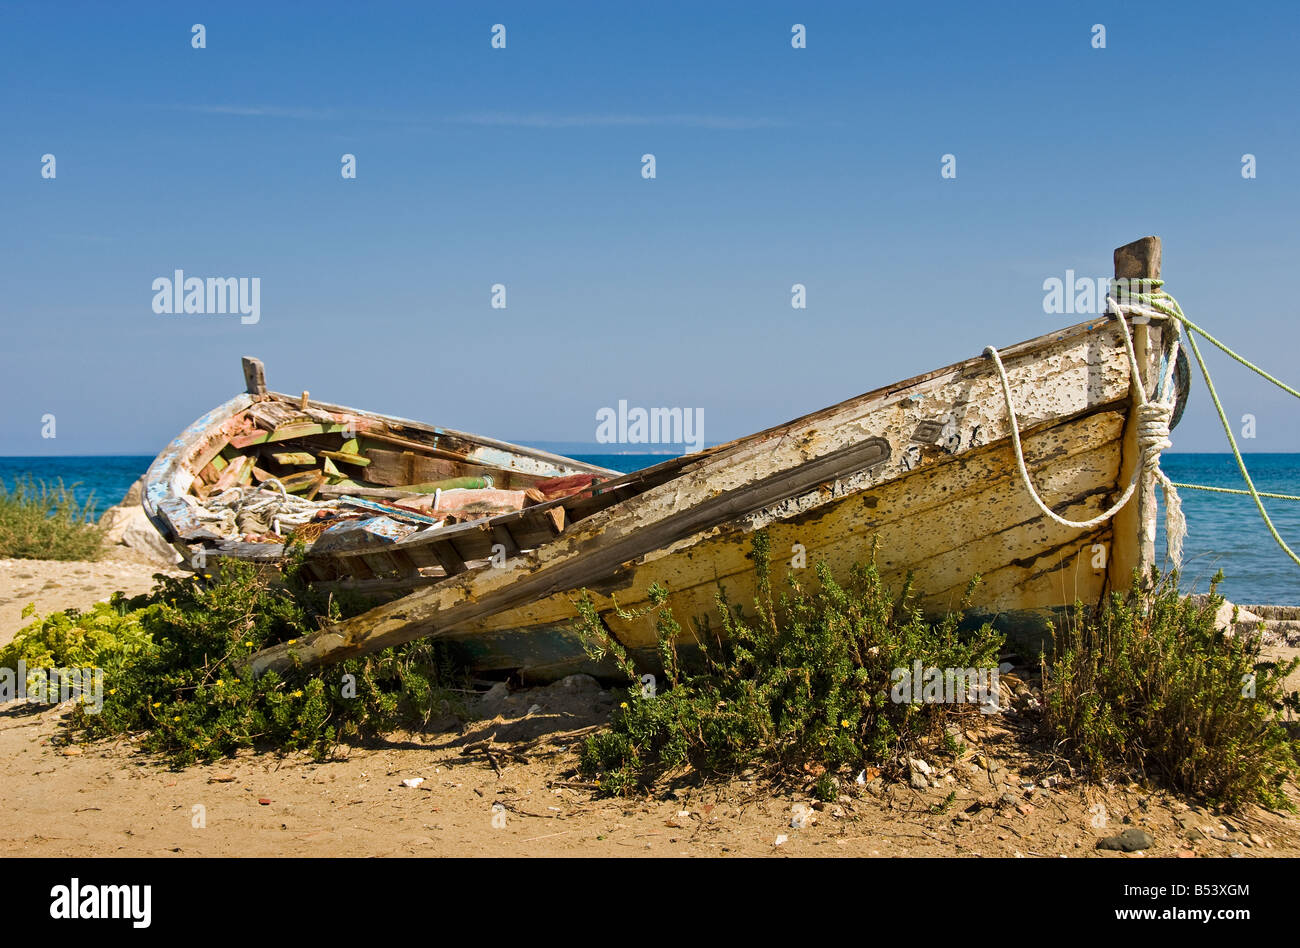 Abandoned boat, Argassi, Zante, Ionian Islands Greece. Stock Photo